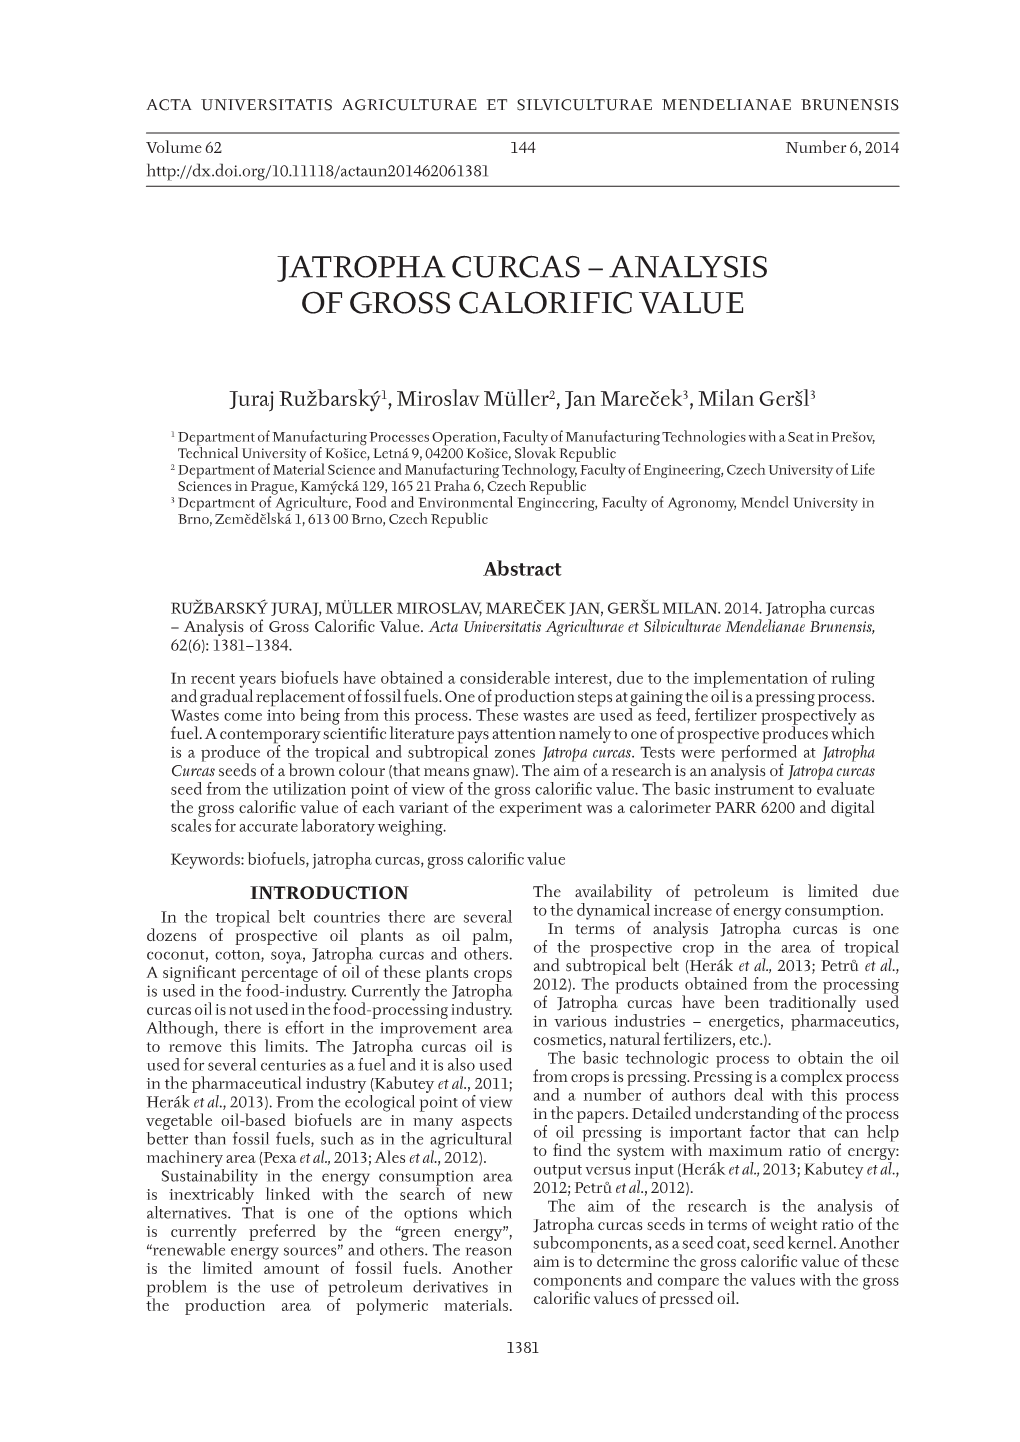 Jatropha Curcas – Analysis of Gross Calorific Value